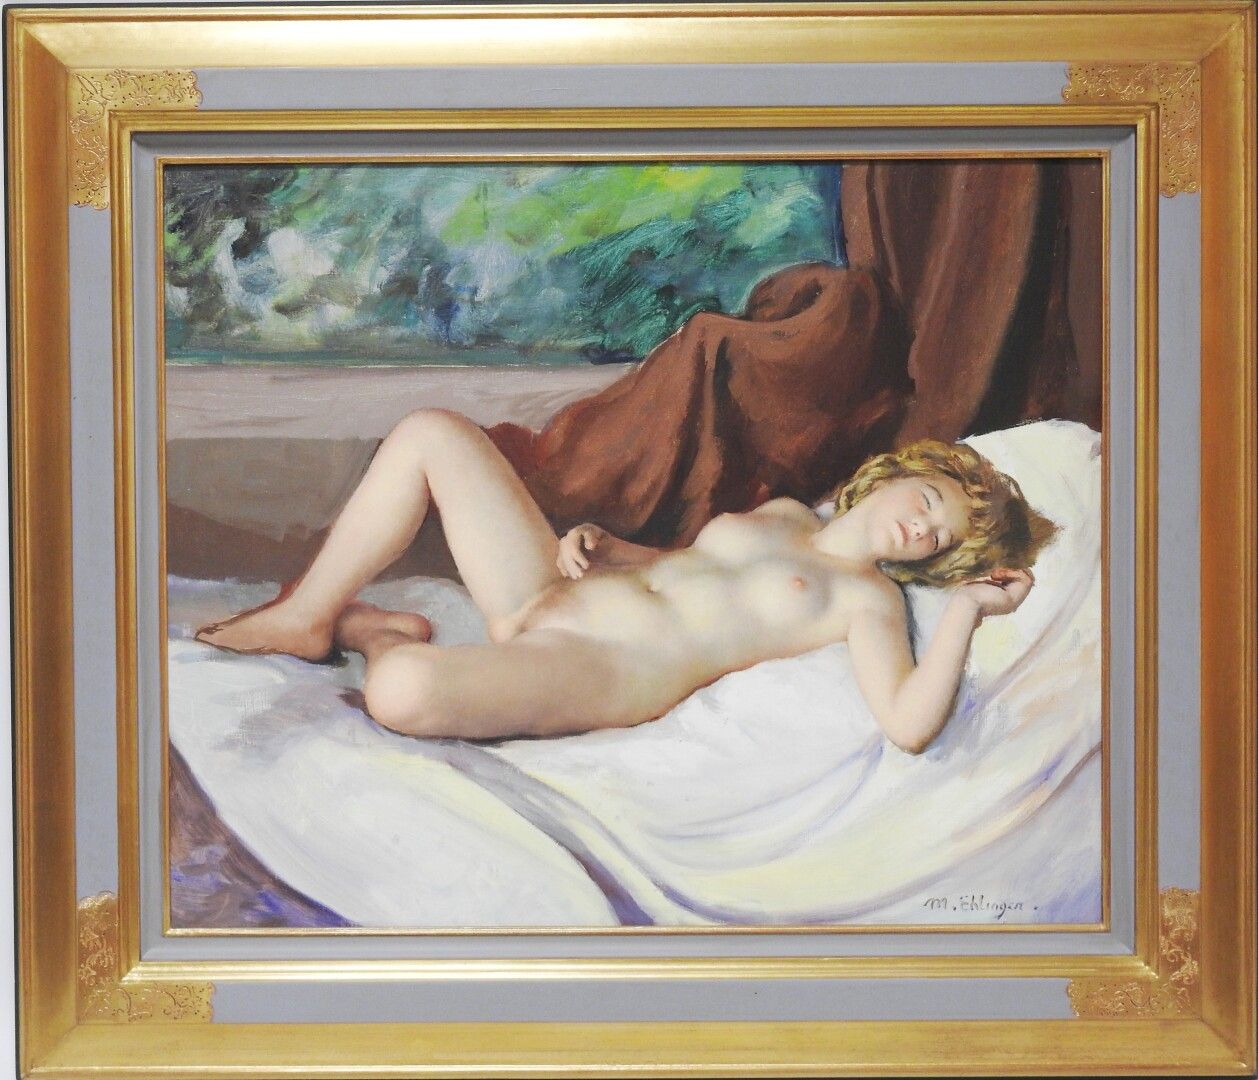 Null 莫里斯-埃林格 (1896 - 1981)

夏天的花园里的裸体

布面油画，右下角有签名

60 x 73 cm